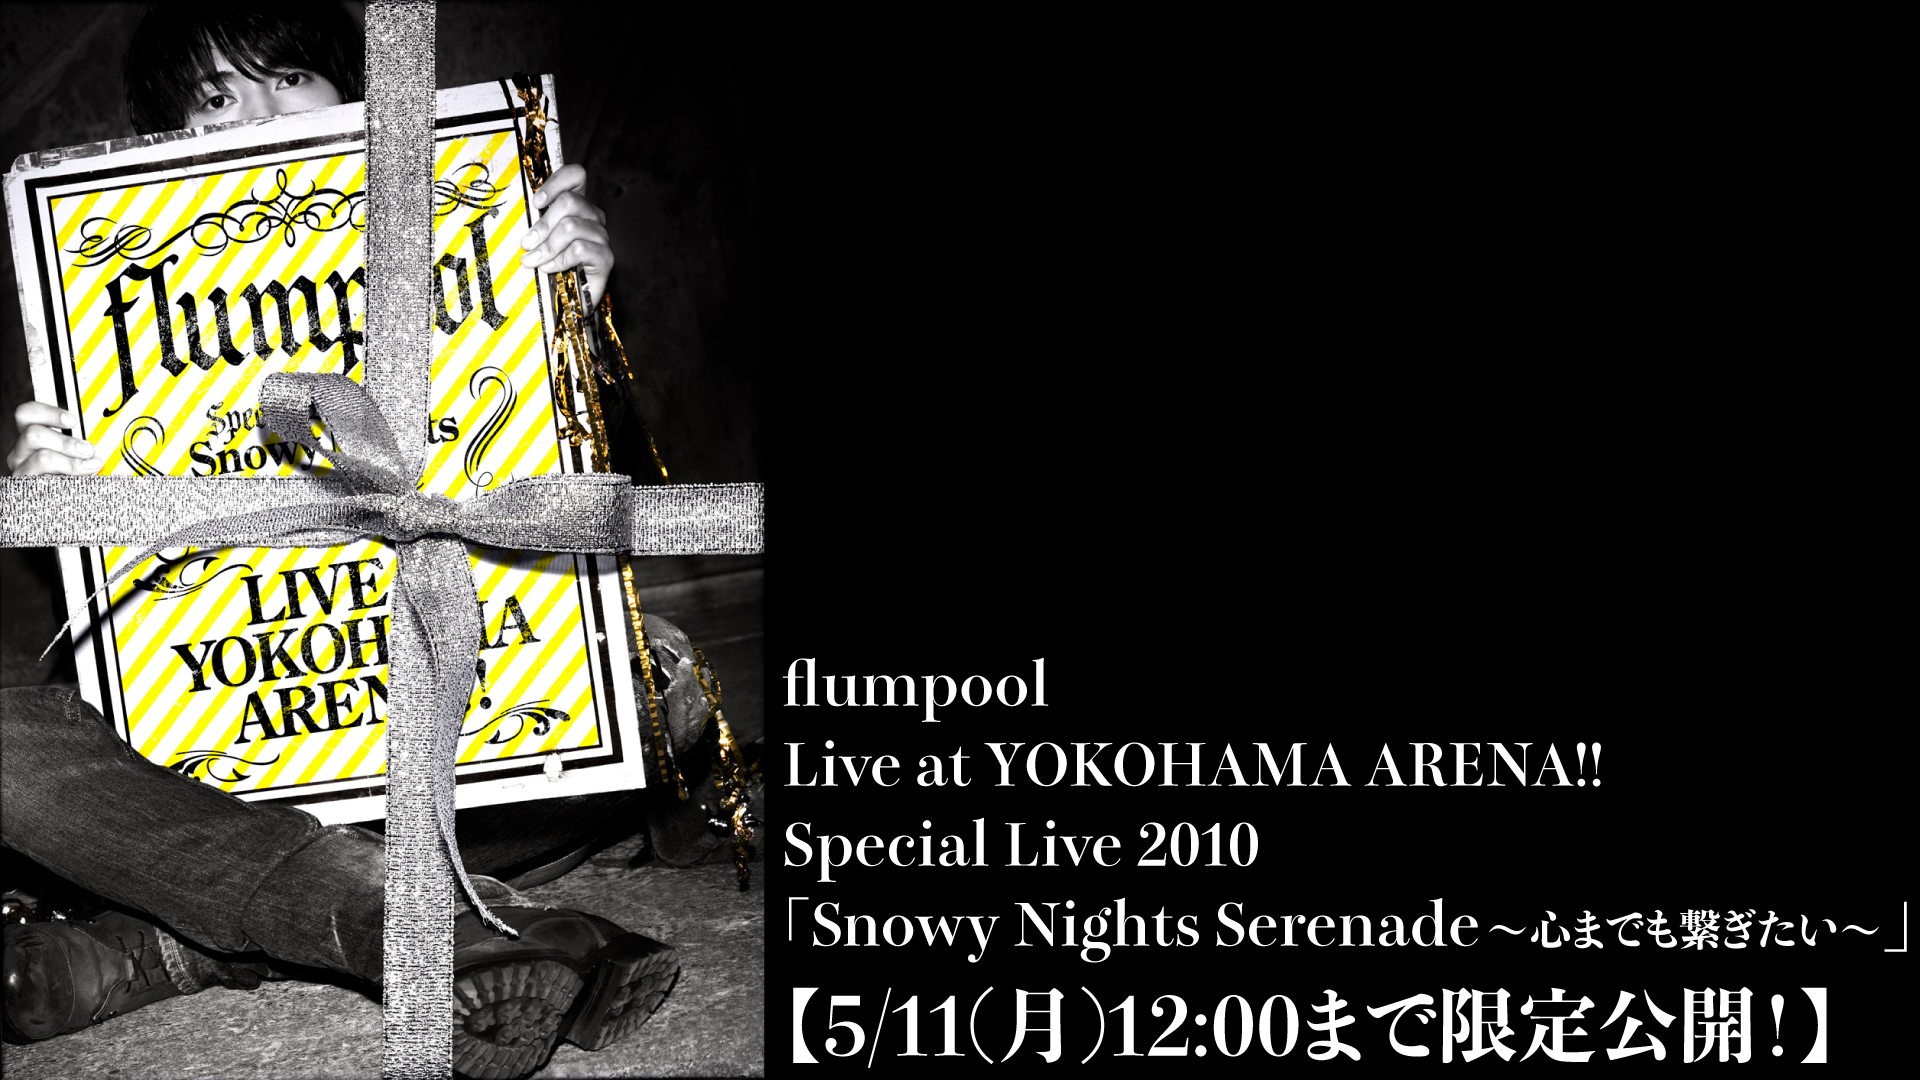 Flumpool Live At Yokohama Arena 10 Snowy Nights Serenade 心までも繋ぎたい 期間限定でyoutubeプレミア公開 毎日更新 ライブ配信カレンダー